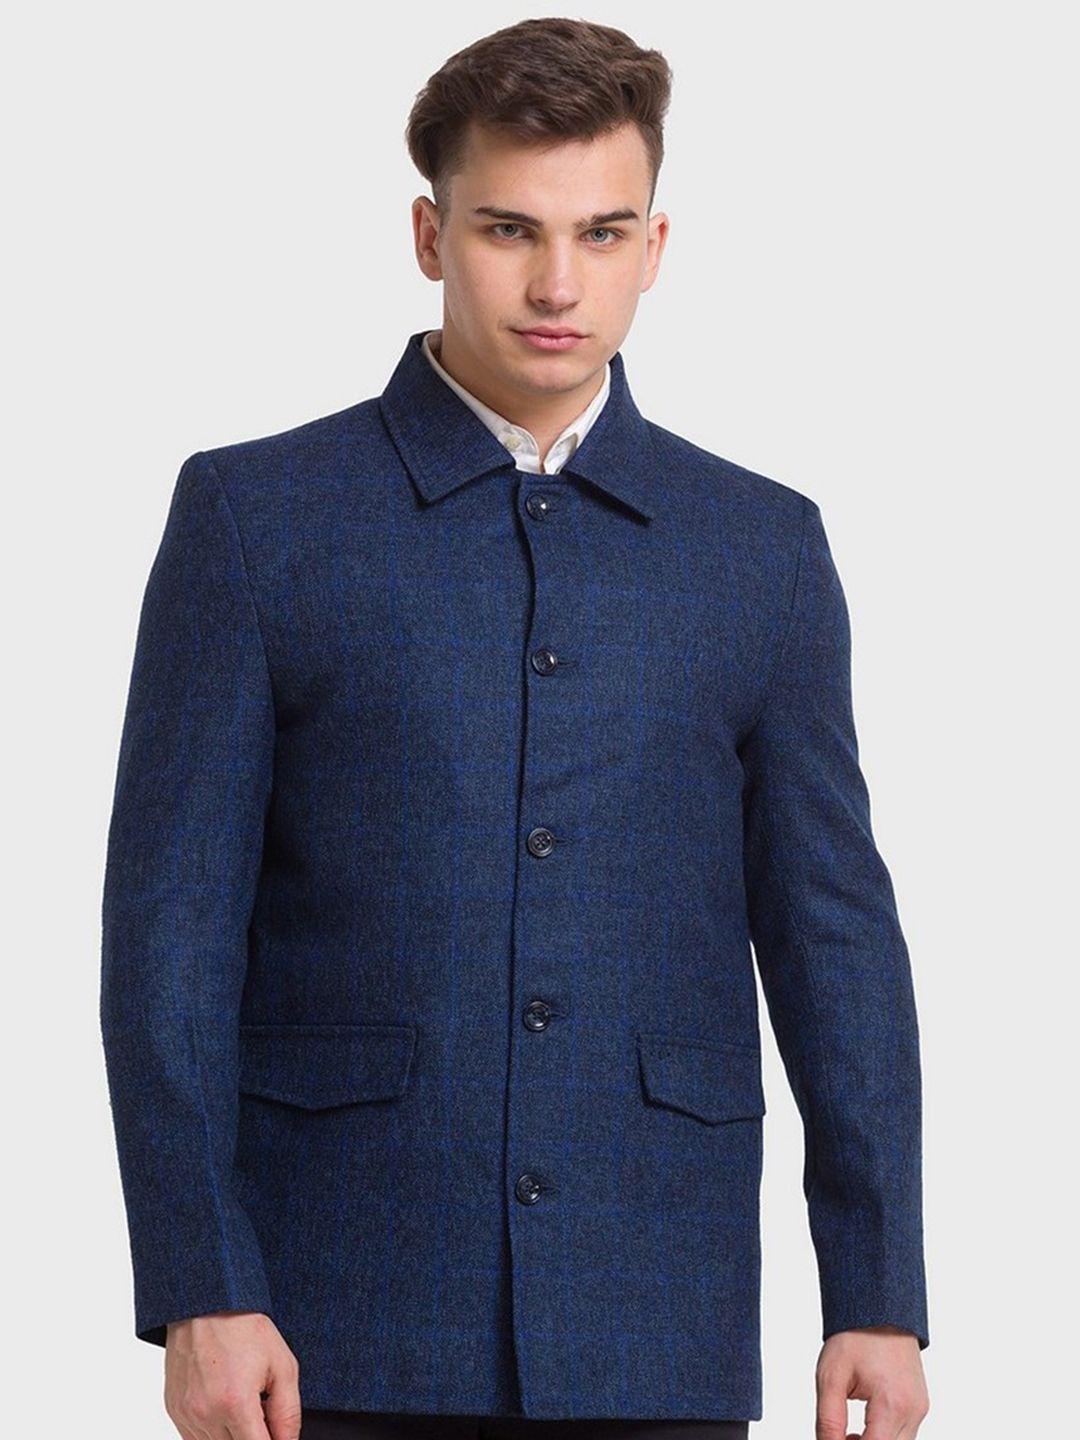 colorplus men blue geometric tailored jacket